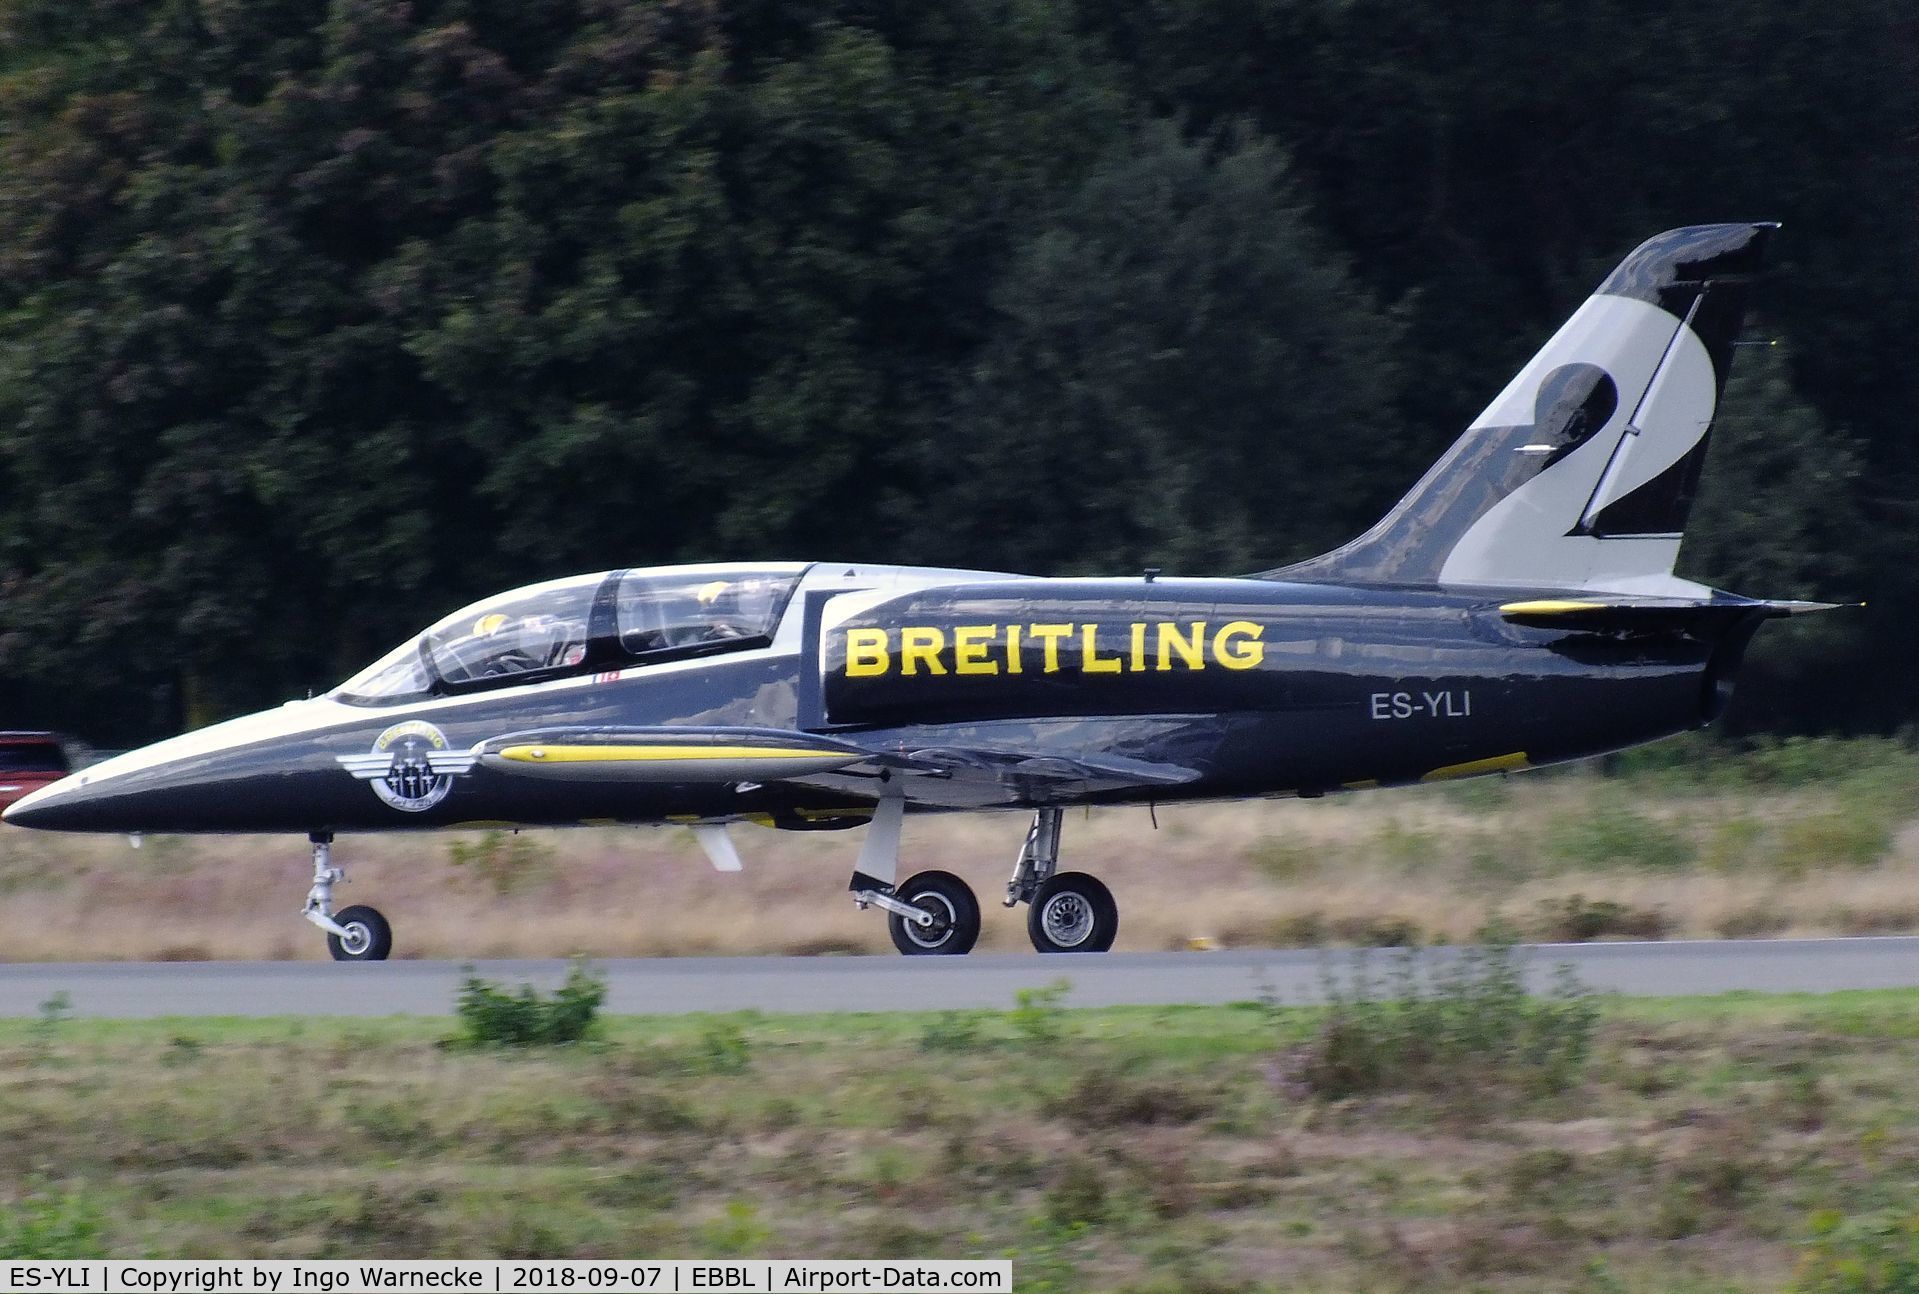 ES-YLI, Aero L-39 Albatros C/N 691876, Aero L-39 Albatros, No 2 of Breitling Jet Team at the 2018 BAFD spotters day, Kleine Brogel airbase